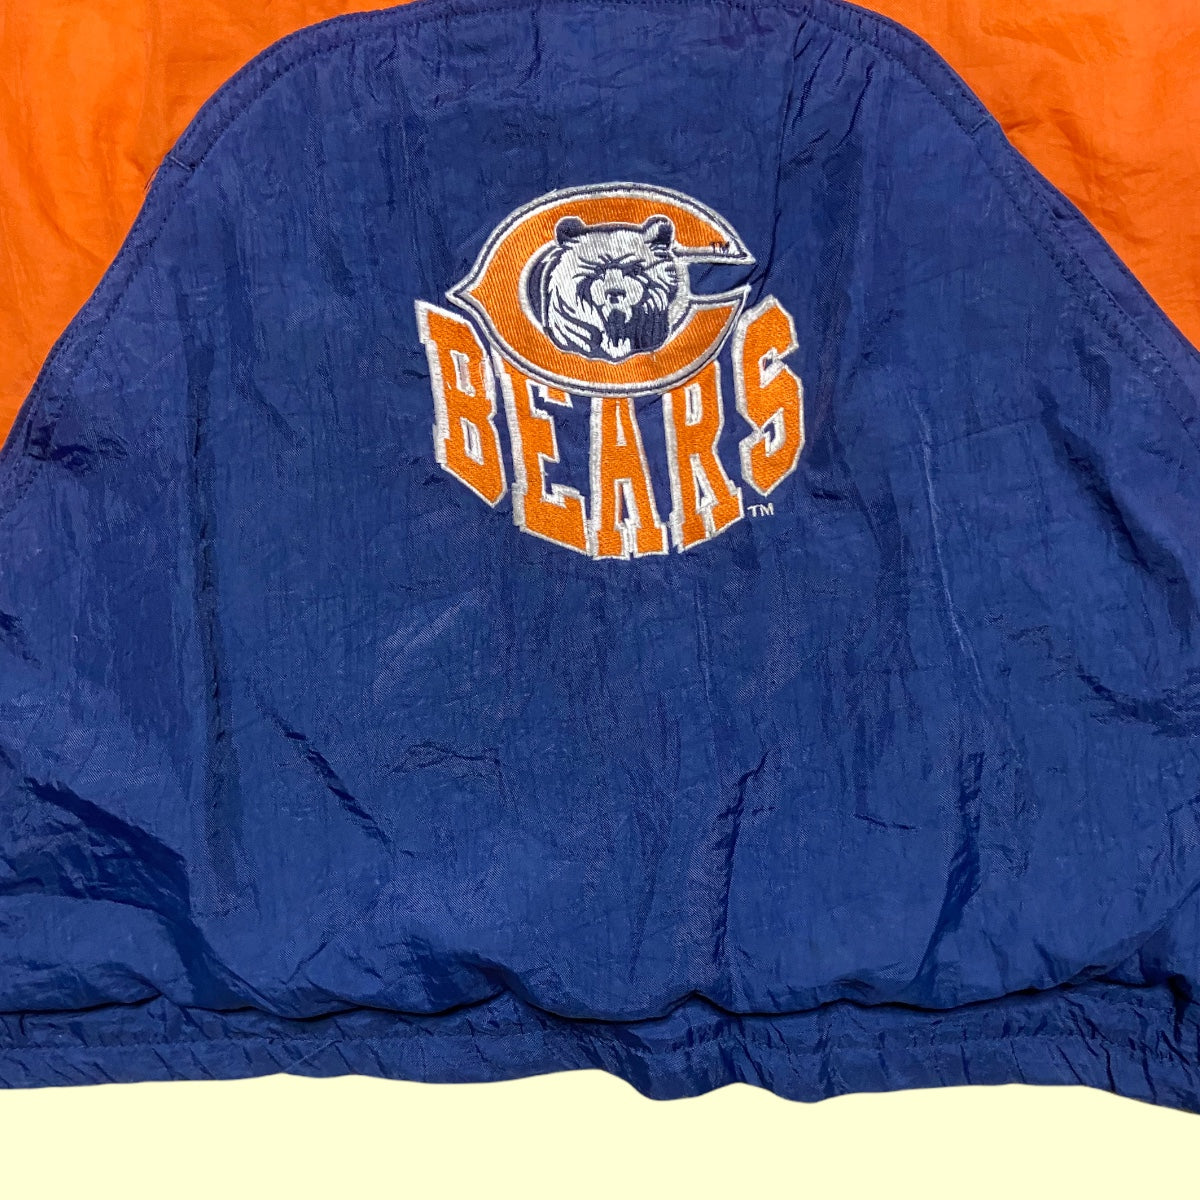 Vintage Pro Line Bears Jacket - XL